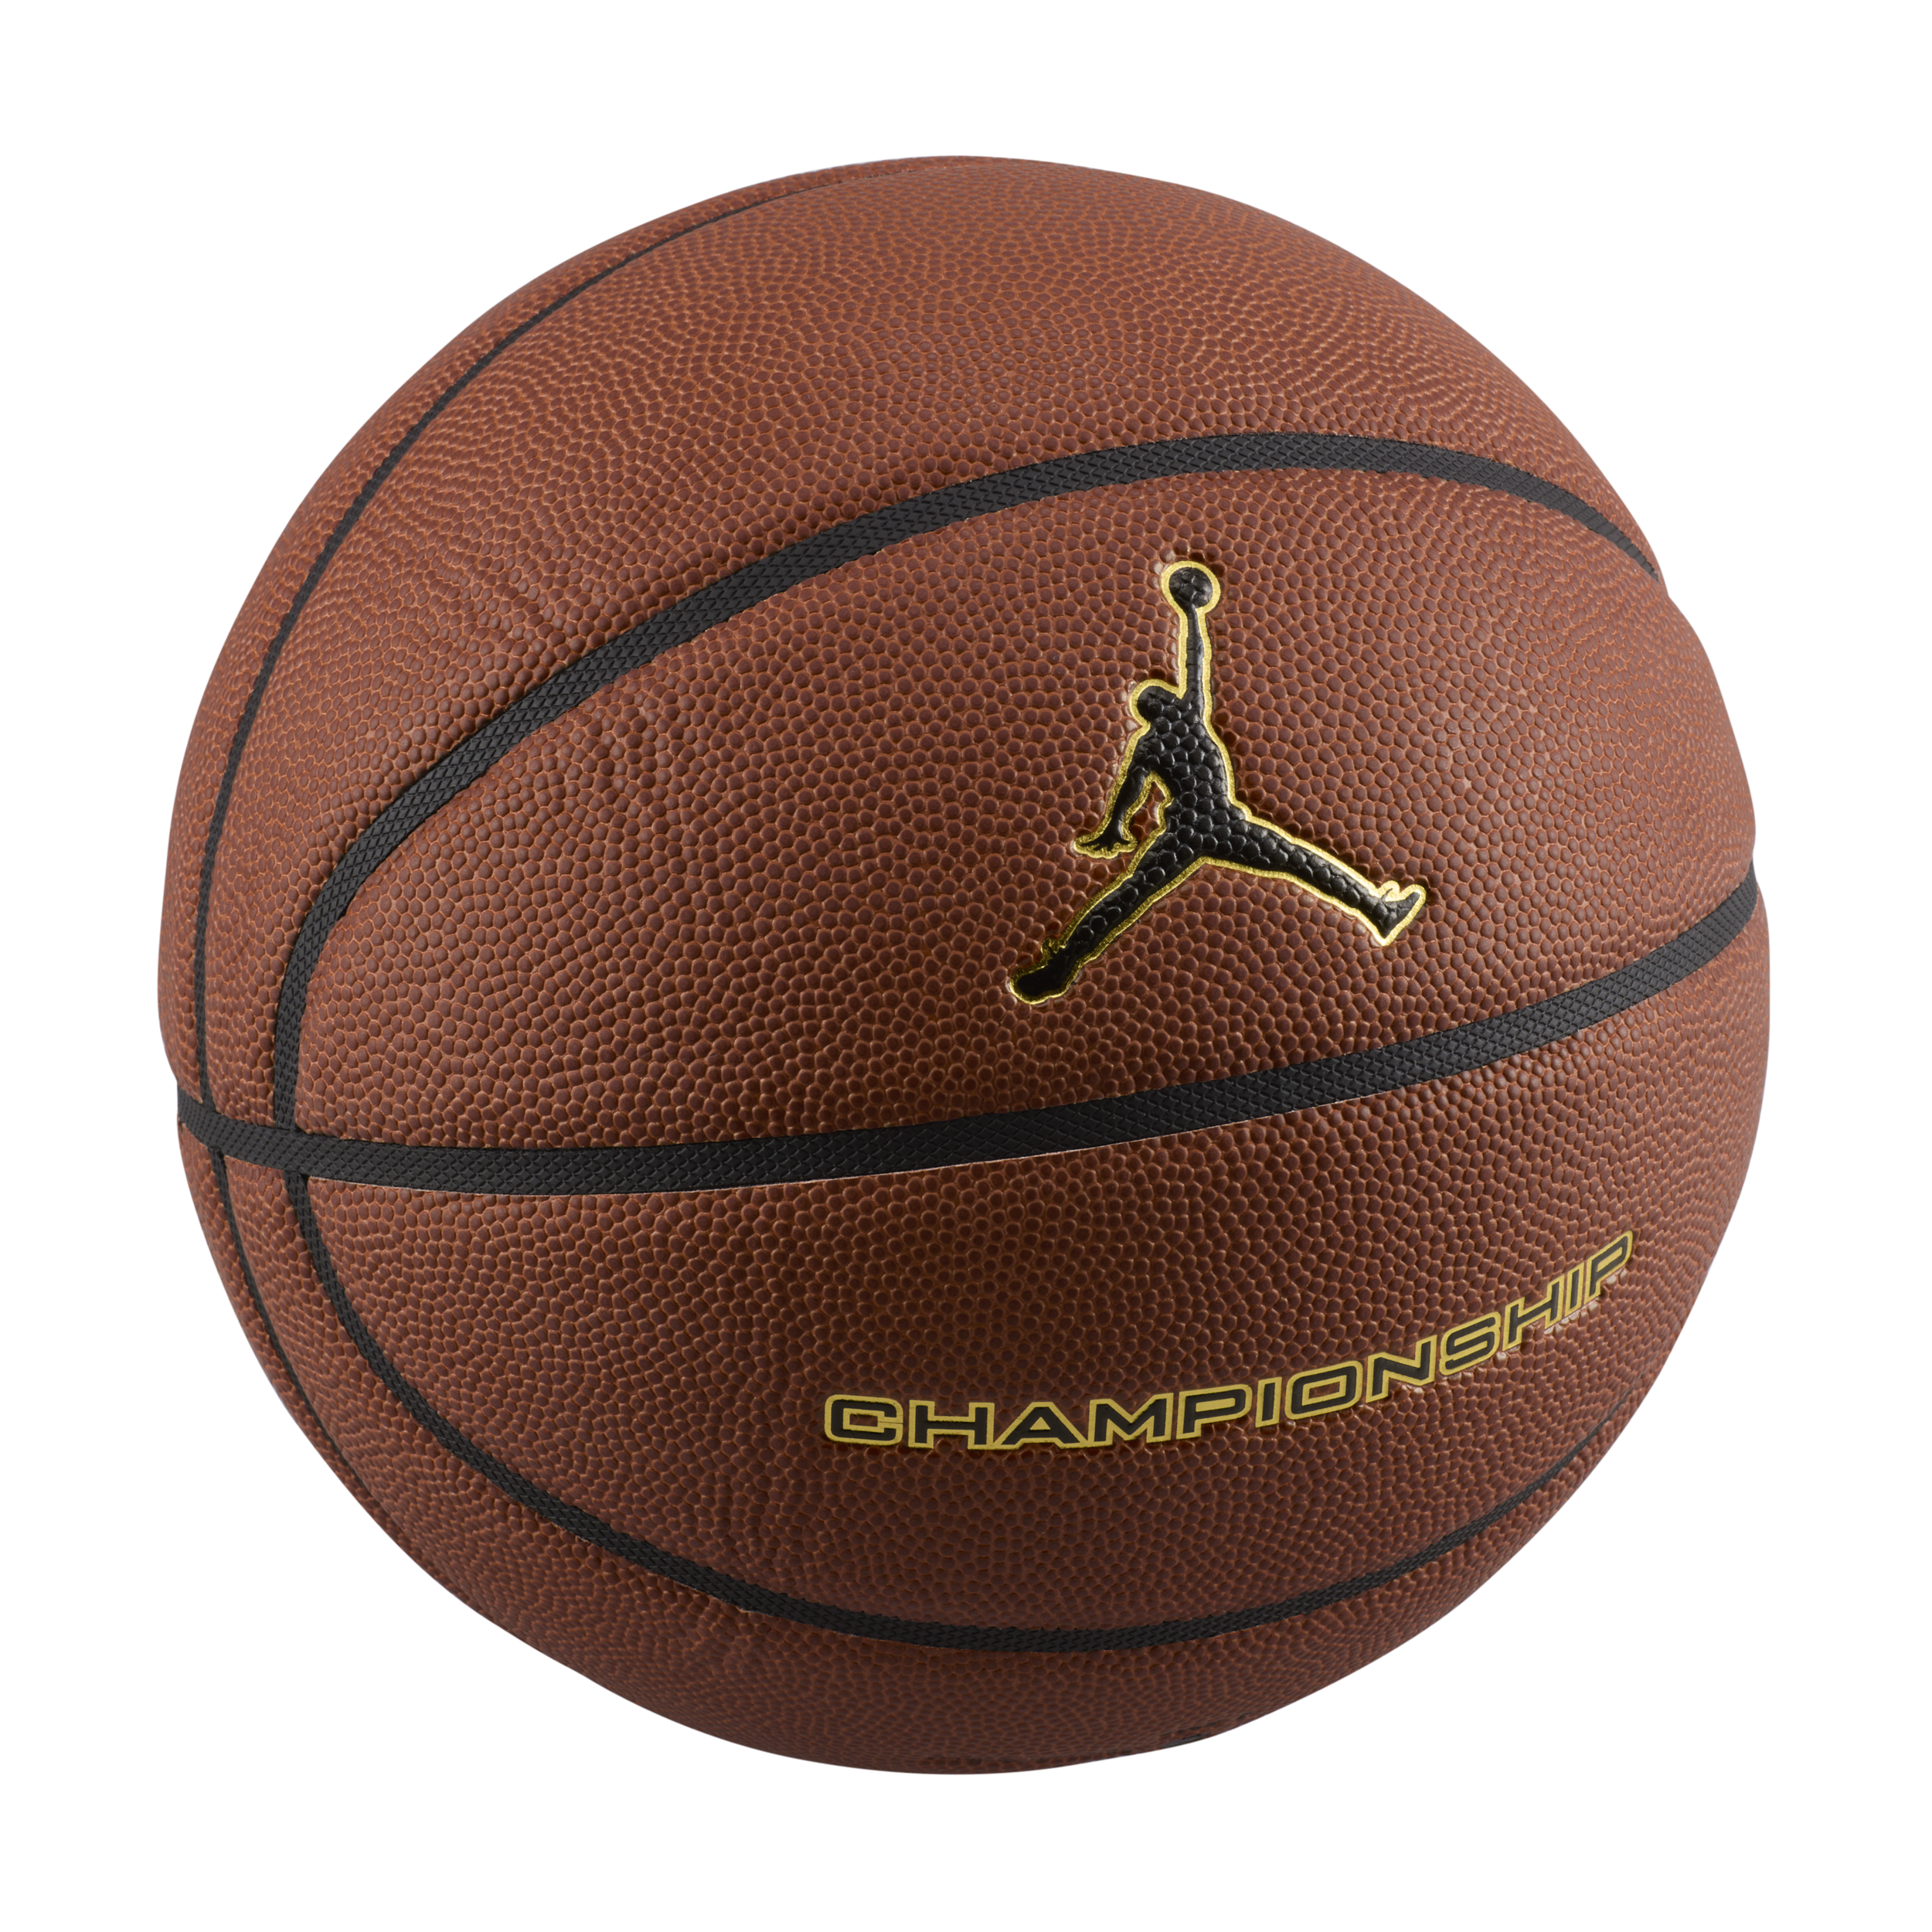 Nike Pallone da basket (non gonfiato) Jordan - Arancione